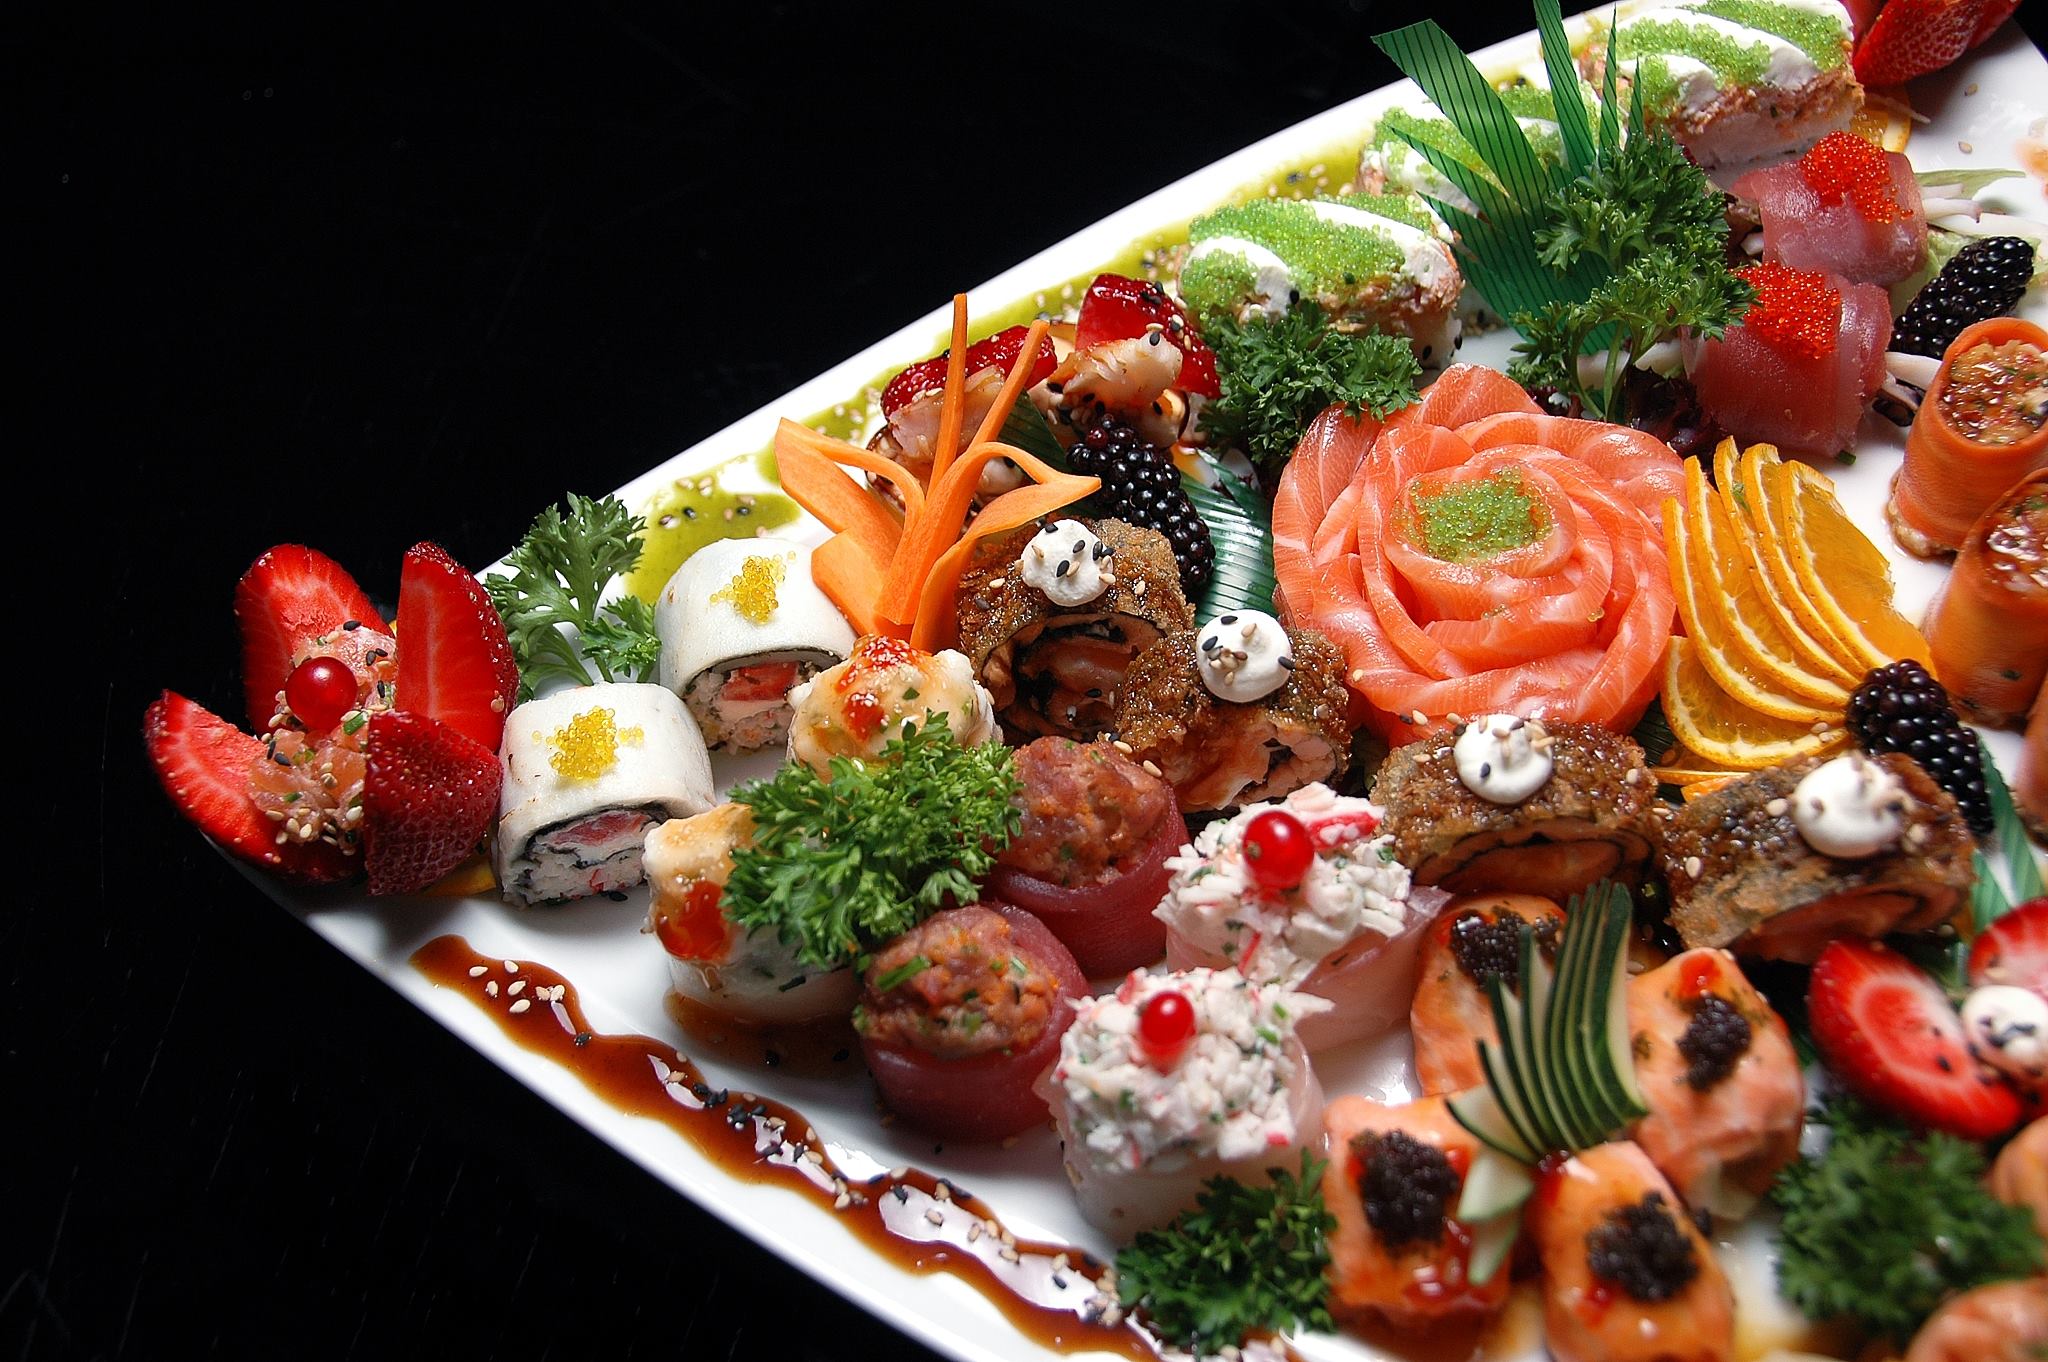 O sushi all you can eat do Sushisan chegou a Almada - NiT New in Town (Inscrição)